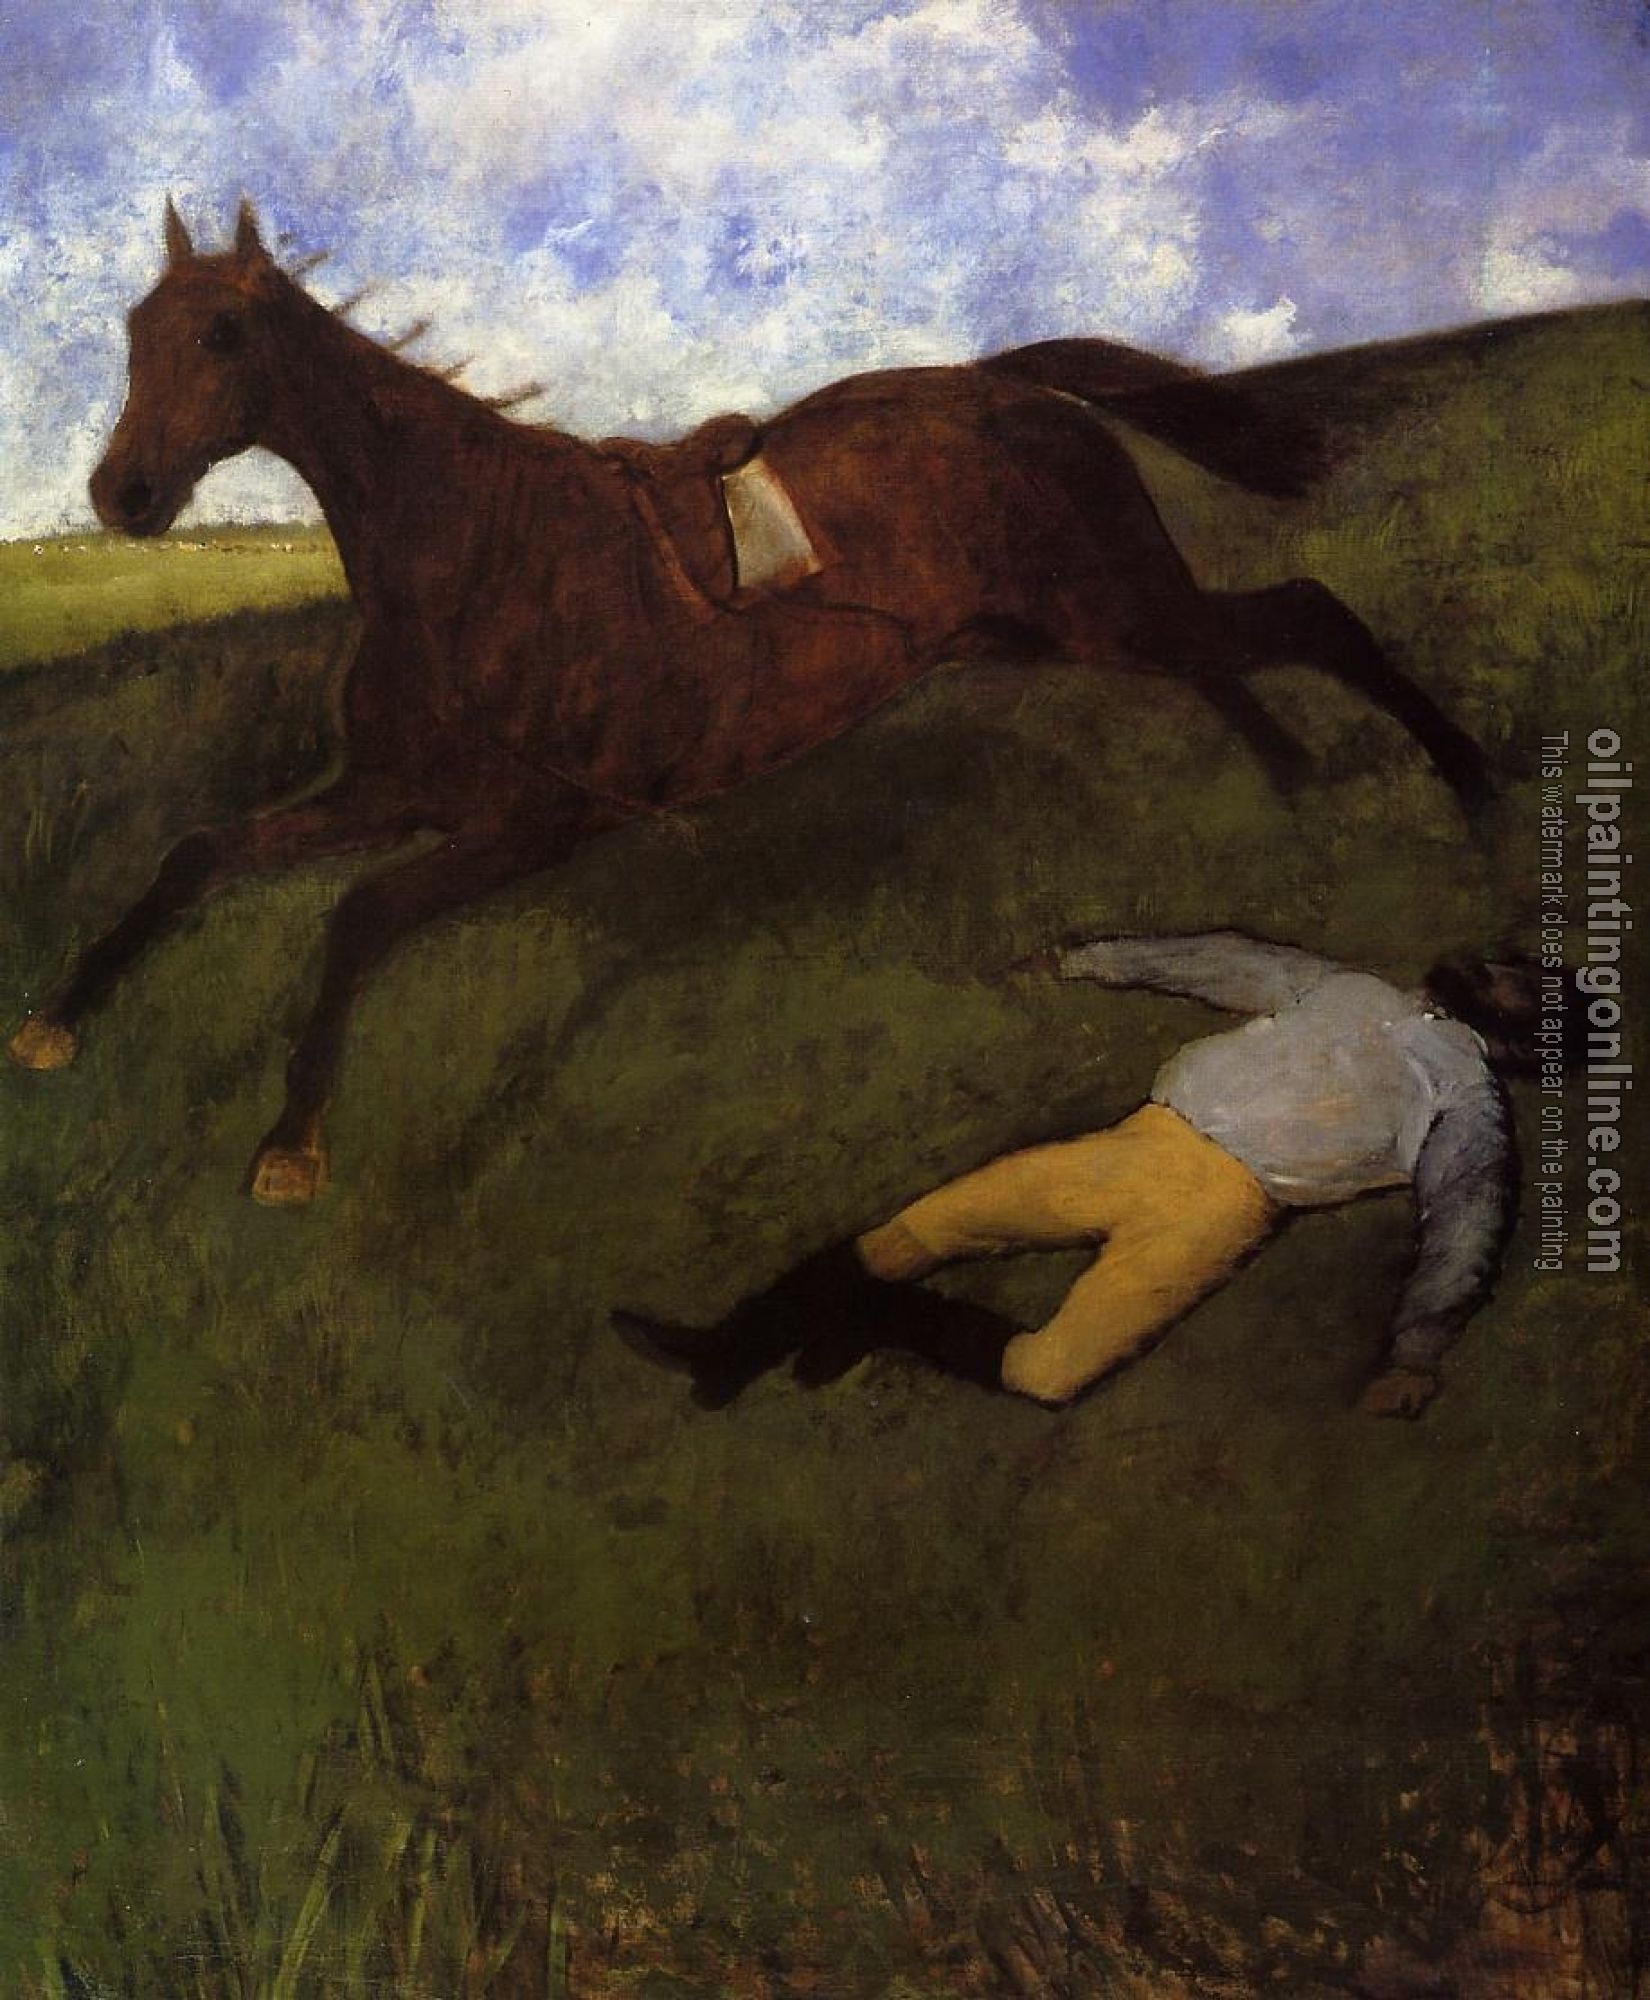 Degas, Edgar - The Fallen Jockey